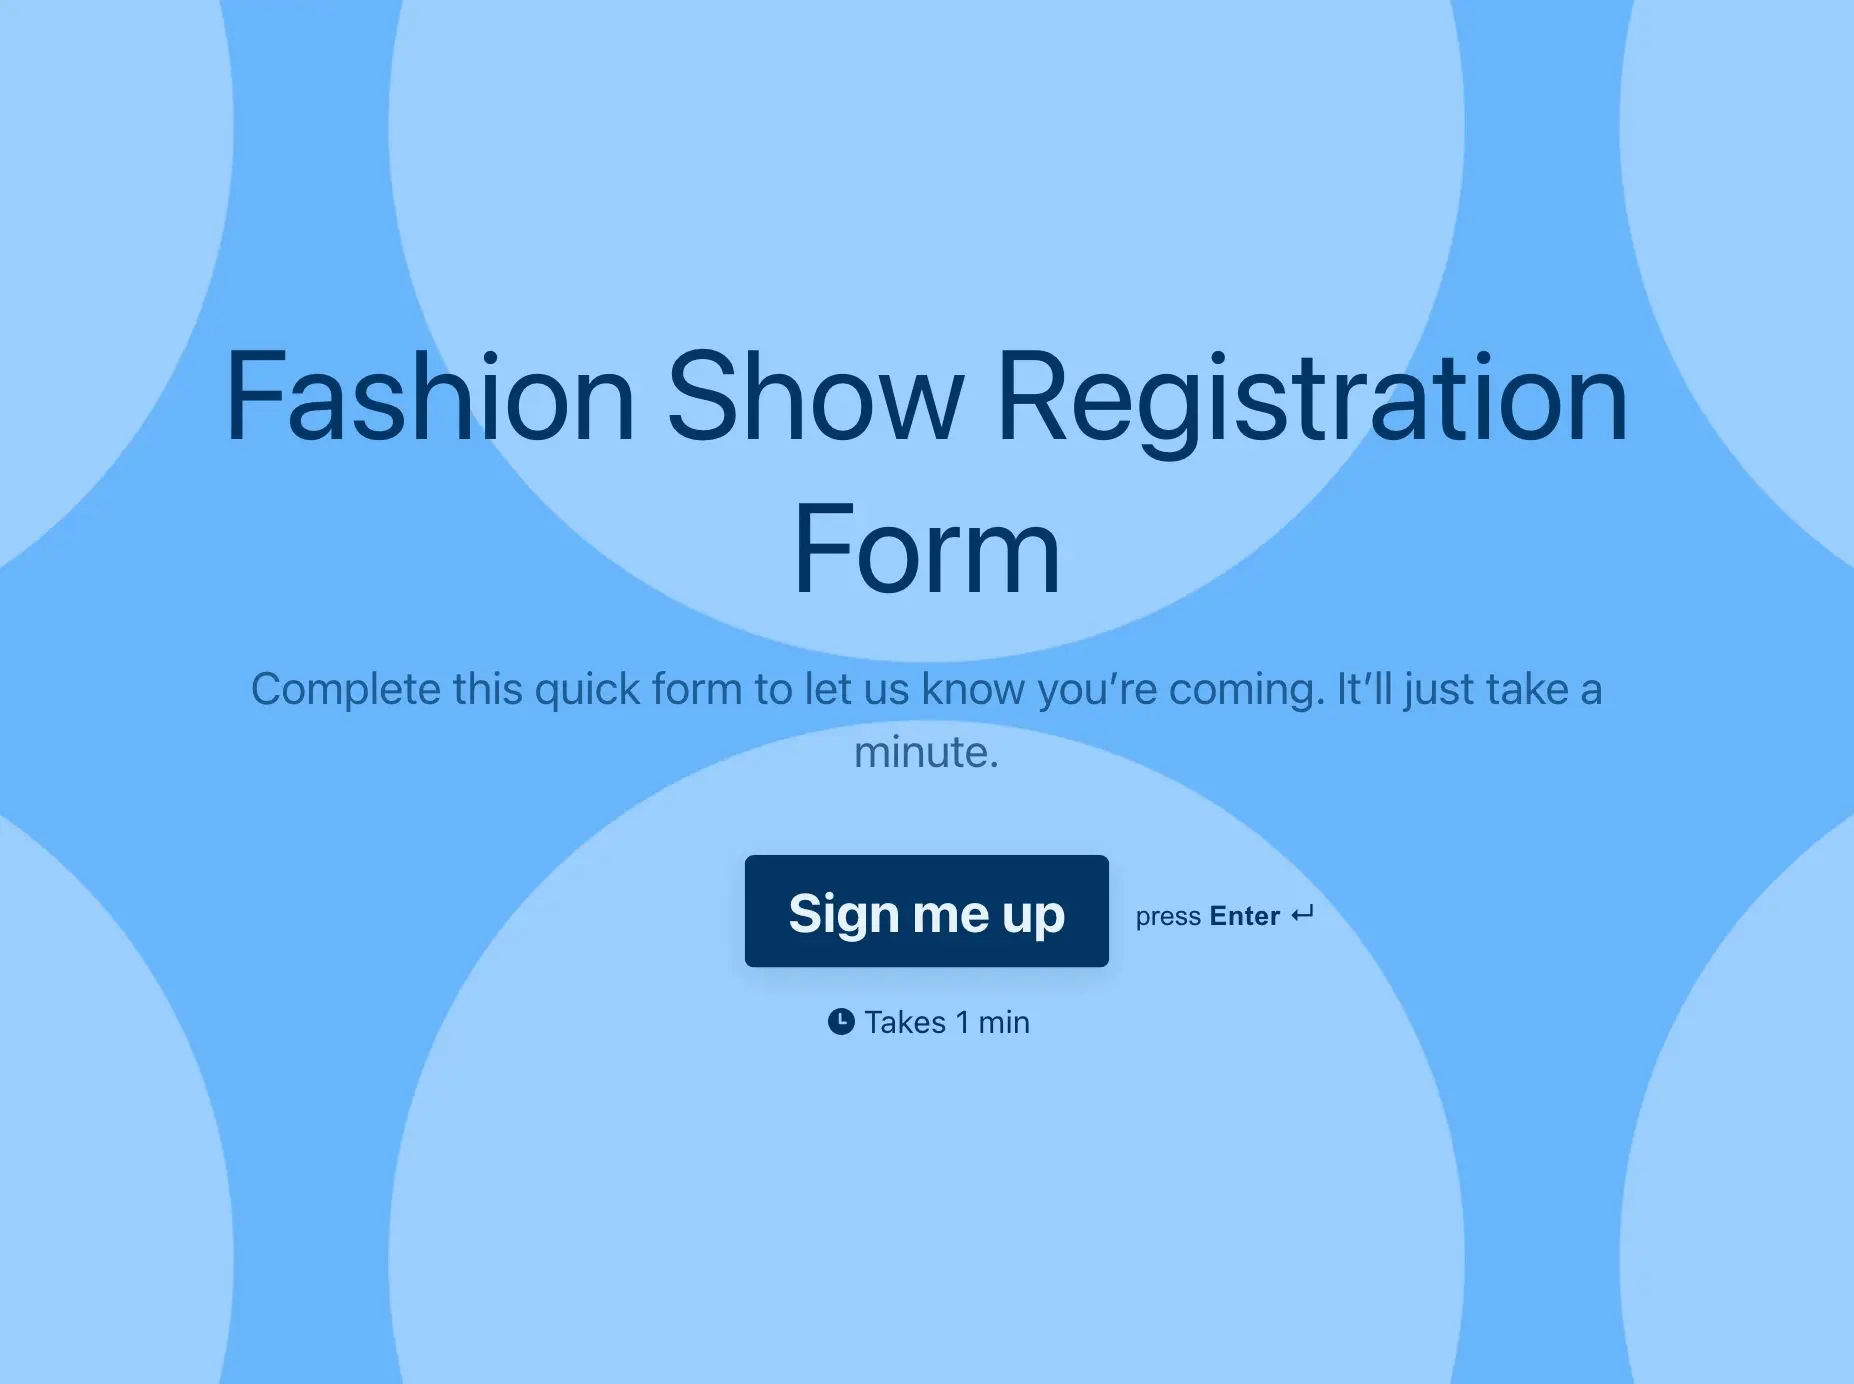 Fashion Show Registration Form Template Hero